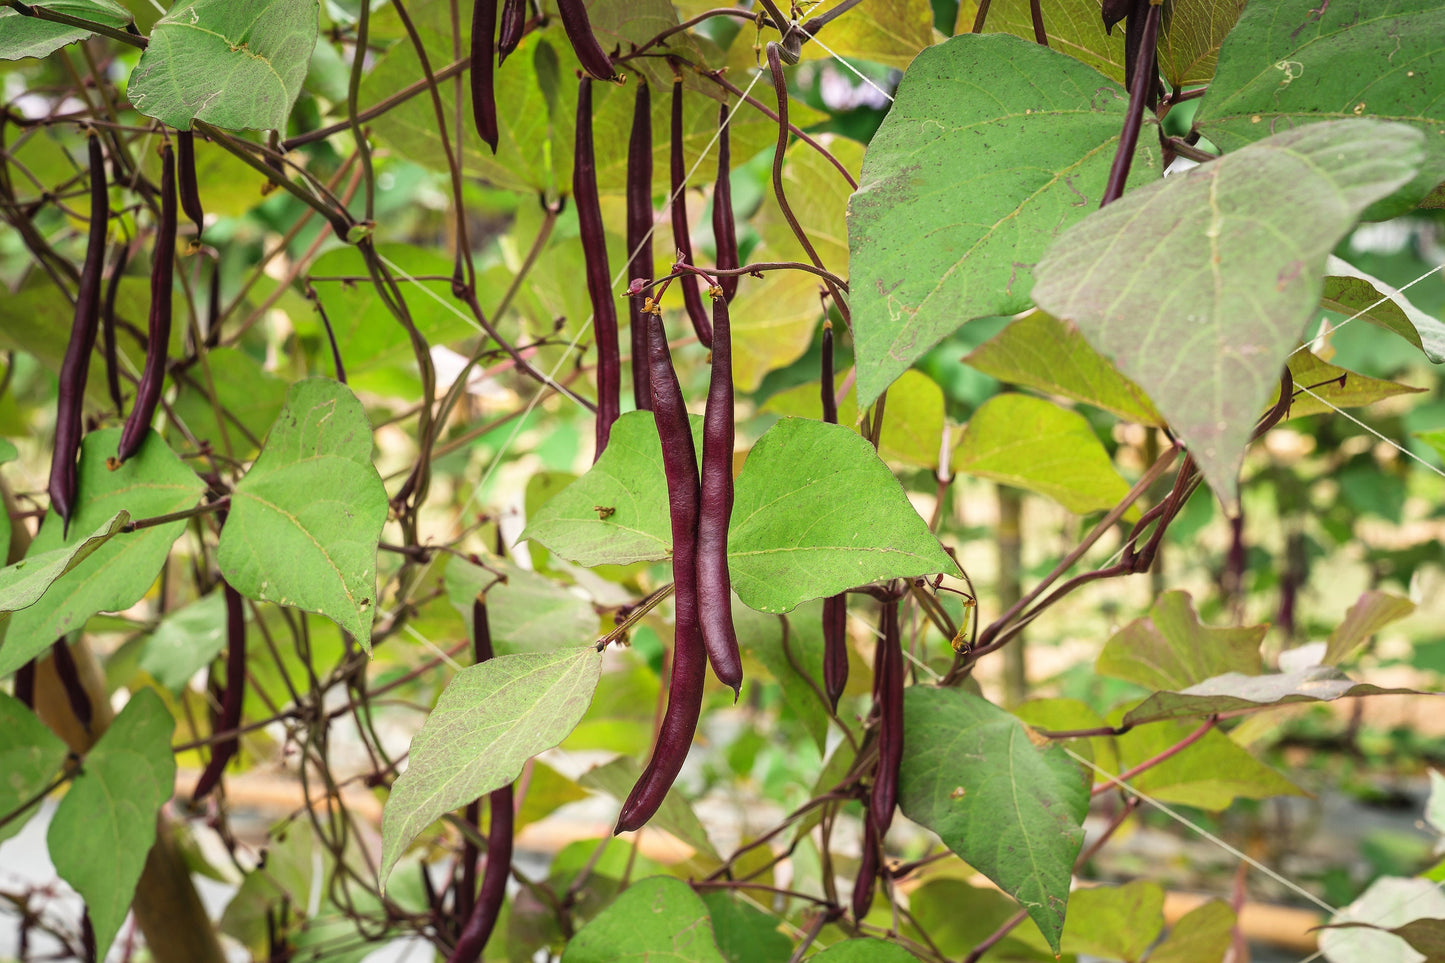 25 RED NOODLE BEAN Yard Long Asparagus Bean Chinese Phaseolus Vulgaris Legume Vegetable Seeds